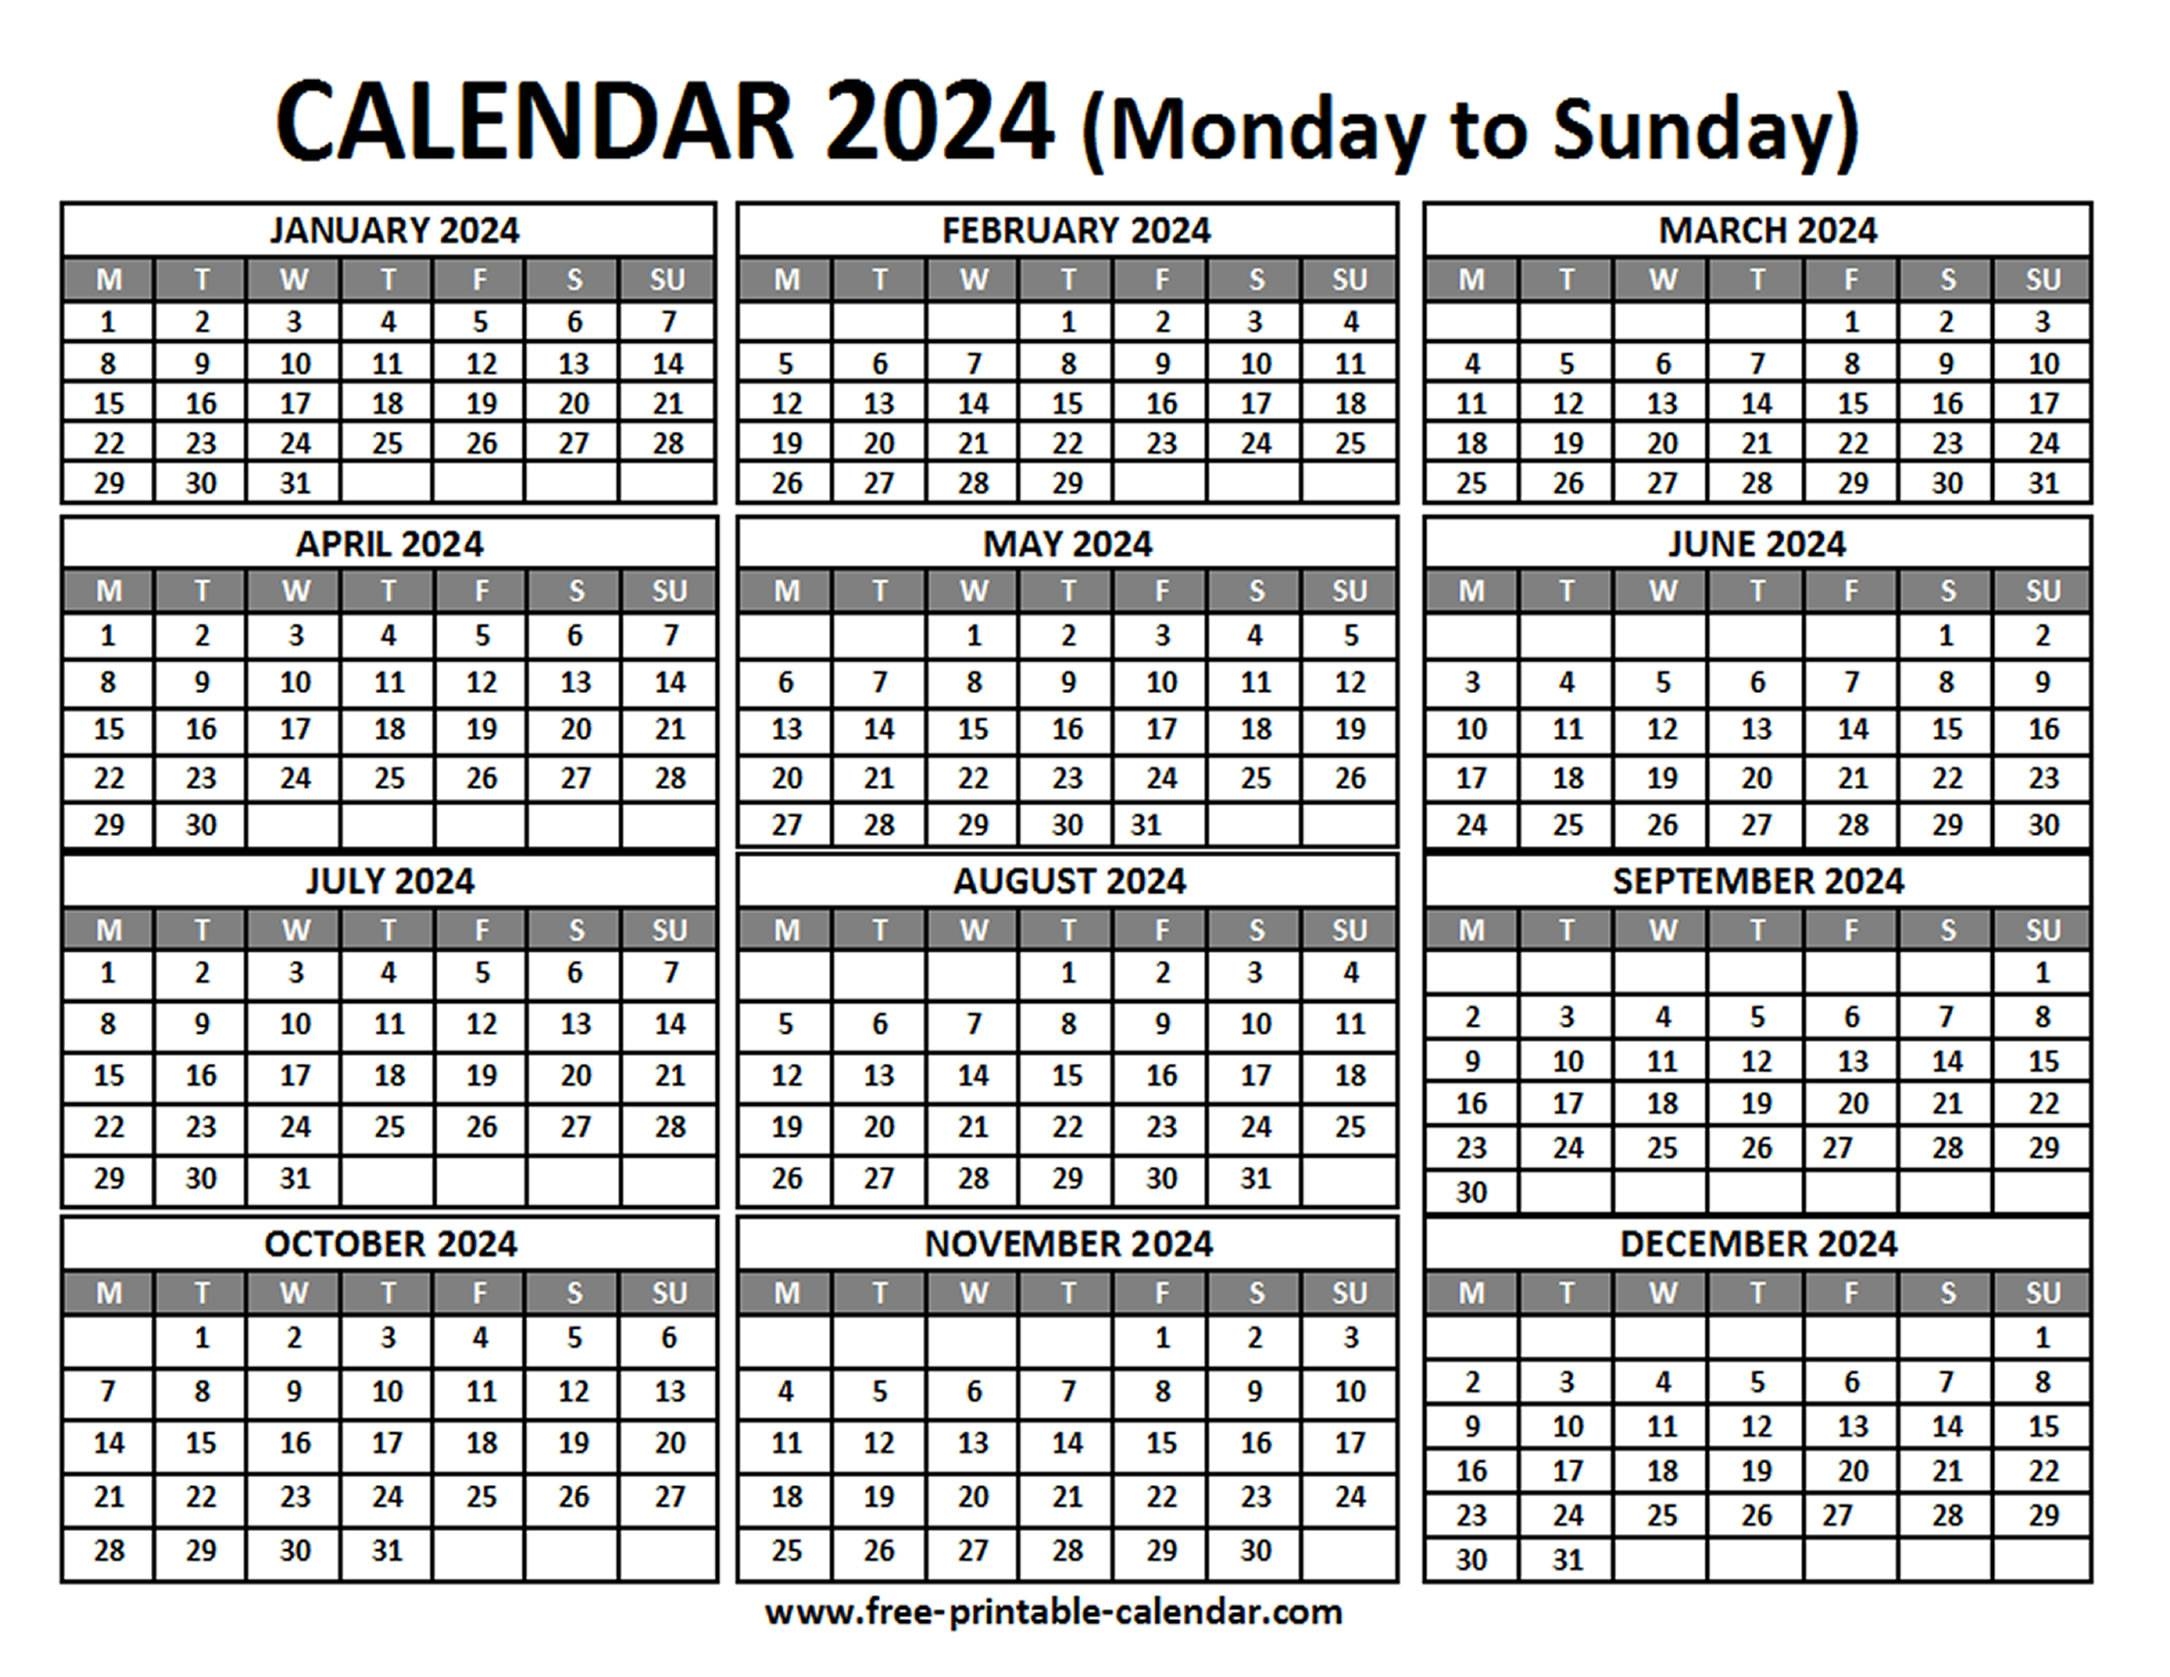 Free Printable 2024 Calendar intended for Free Printable Calendar 2024 A4 Size